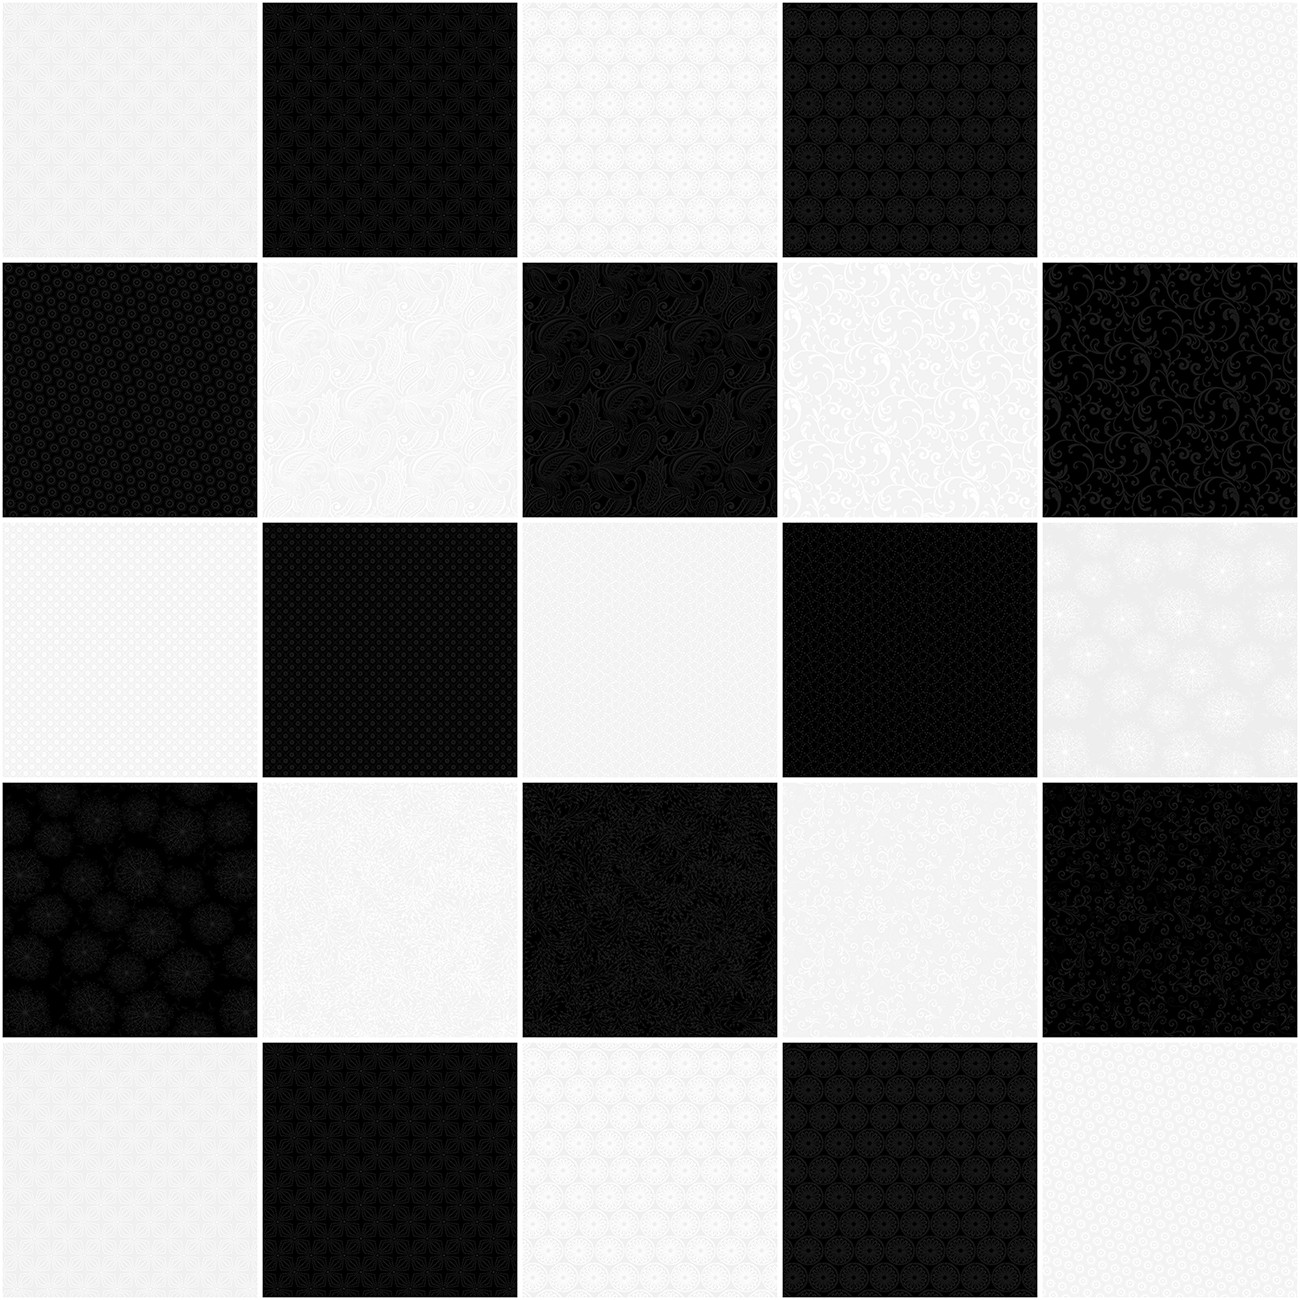 Шахматная доска 5 на 5. Шахматная доска. Шахматная доска черно белая. Клетки шахматной доски. Черно белые квадратики.